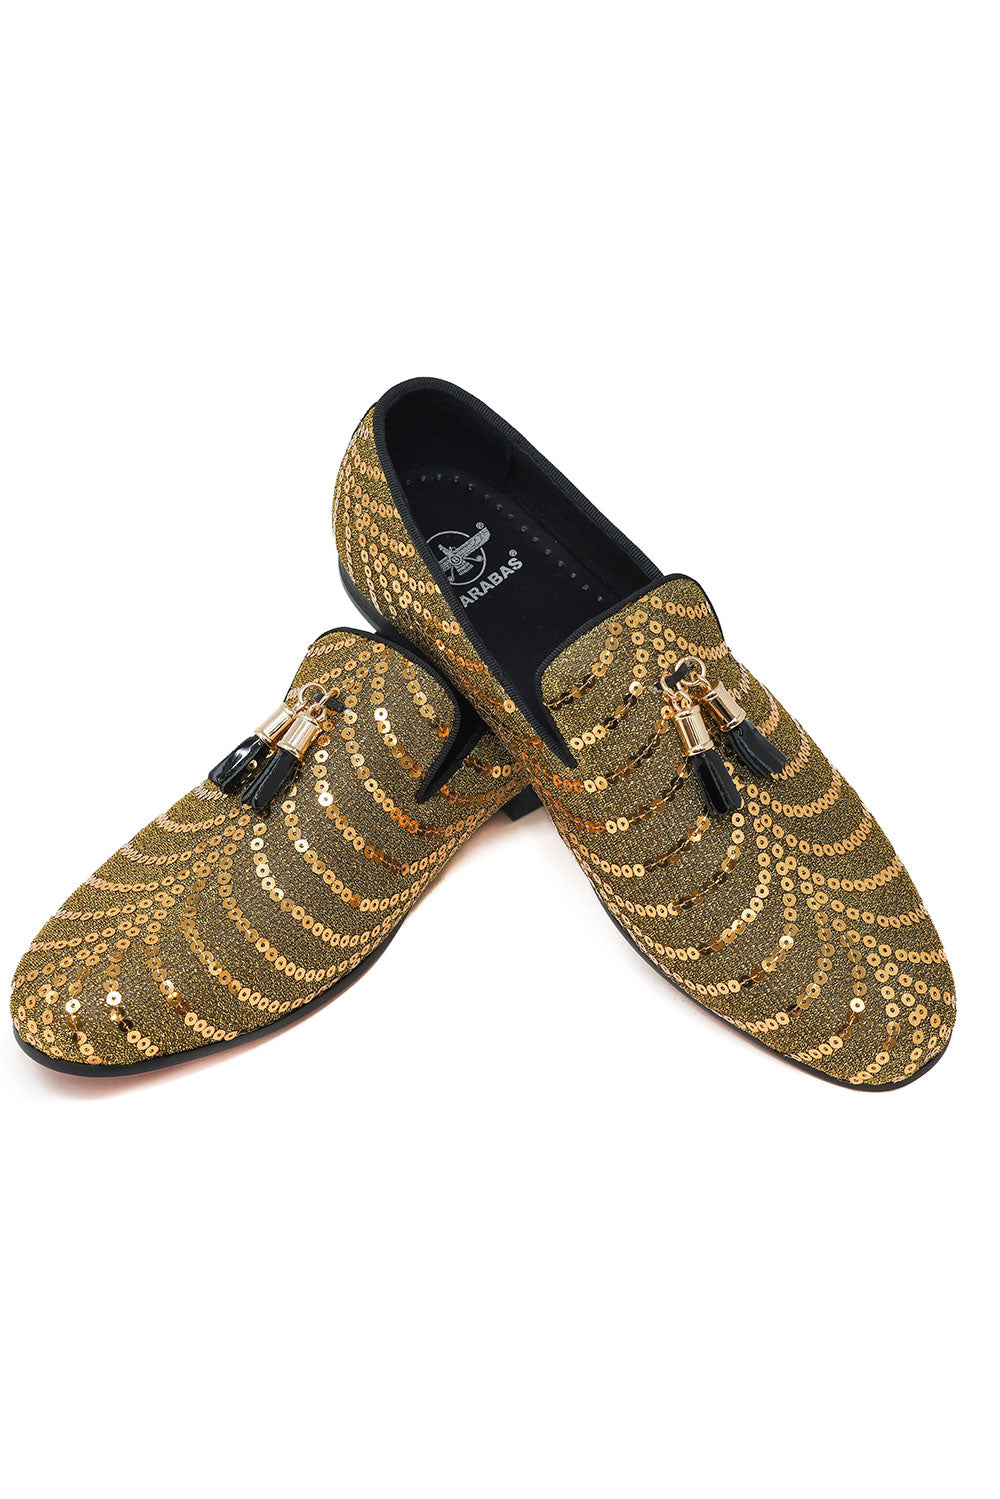 BARABAS Men's Medusa Rhinestone Jewels Slip On Dress Shoes 2SHR12